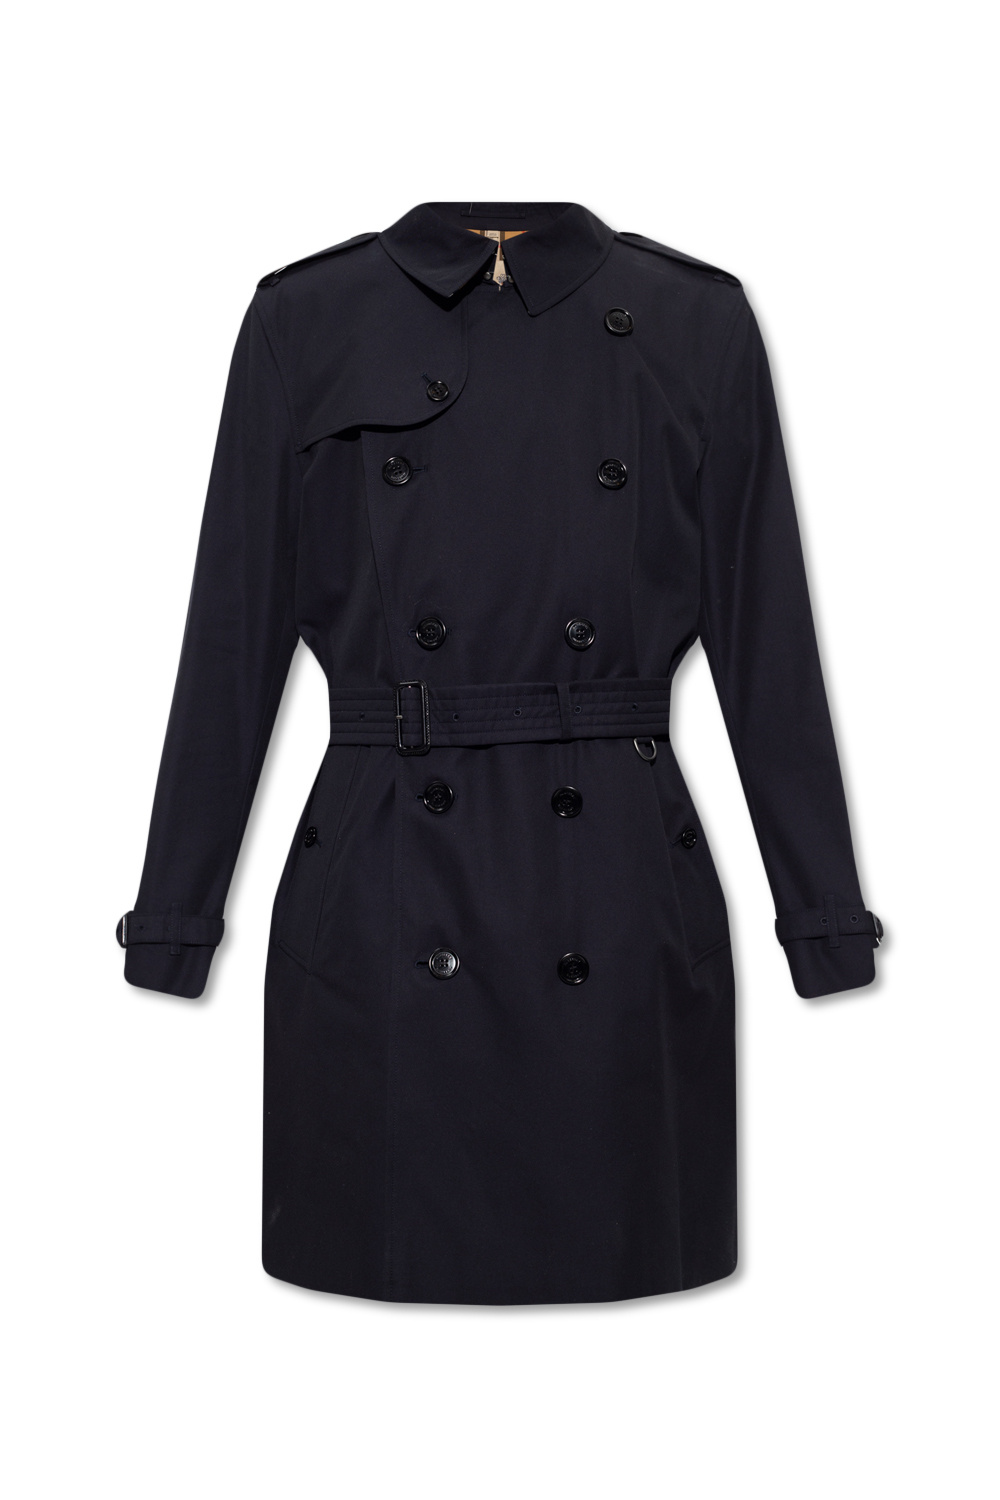 Burberry 'Kensington' double-breasted trench coat | Men's Clothing | Vitkac